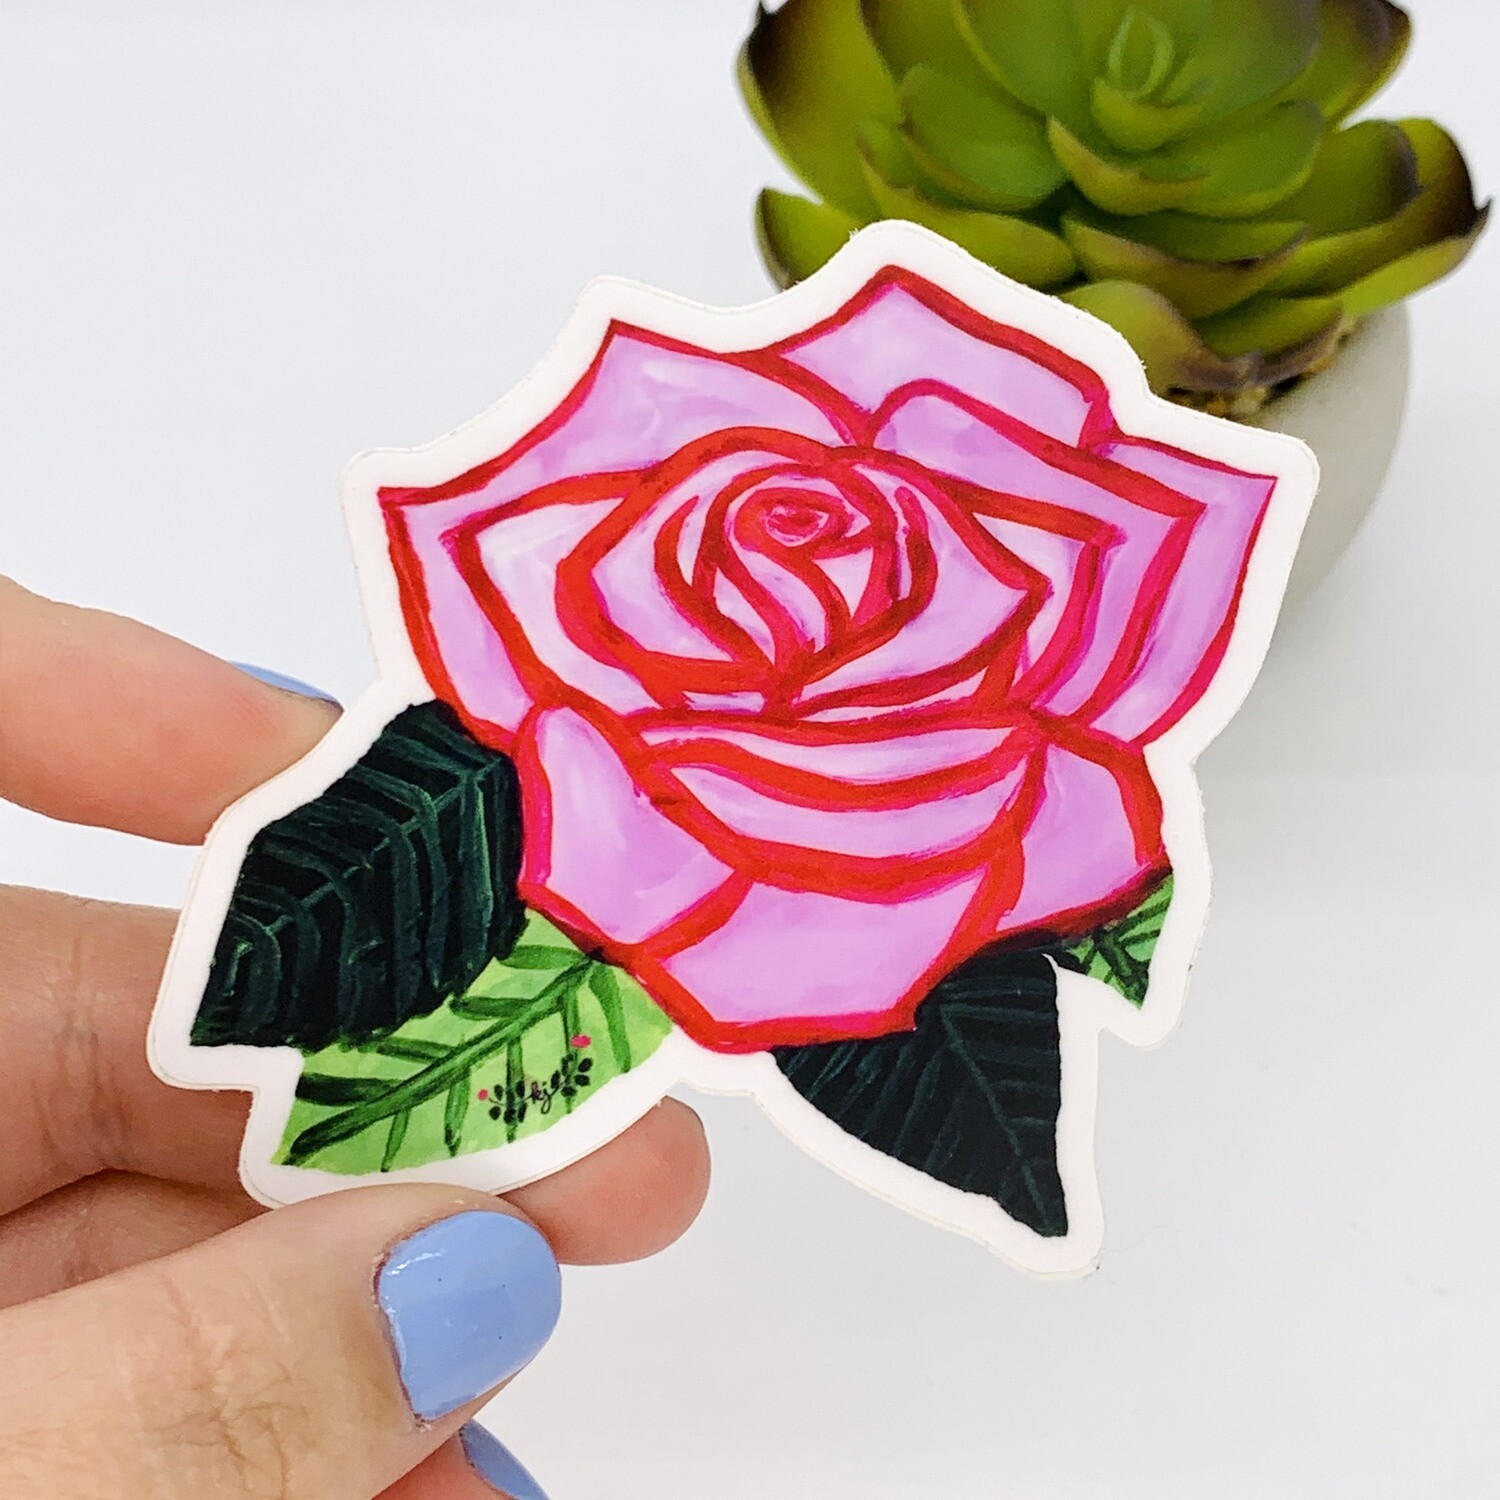 Rose Decal Sticker